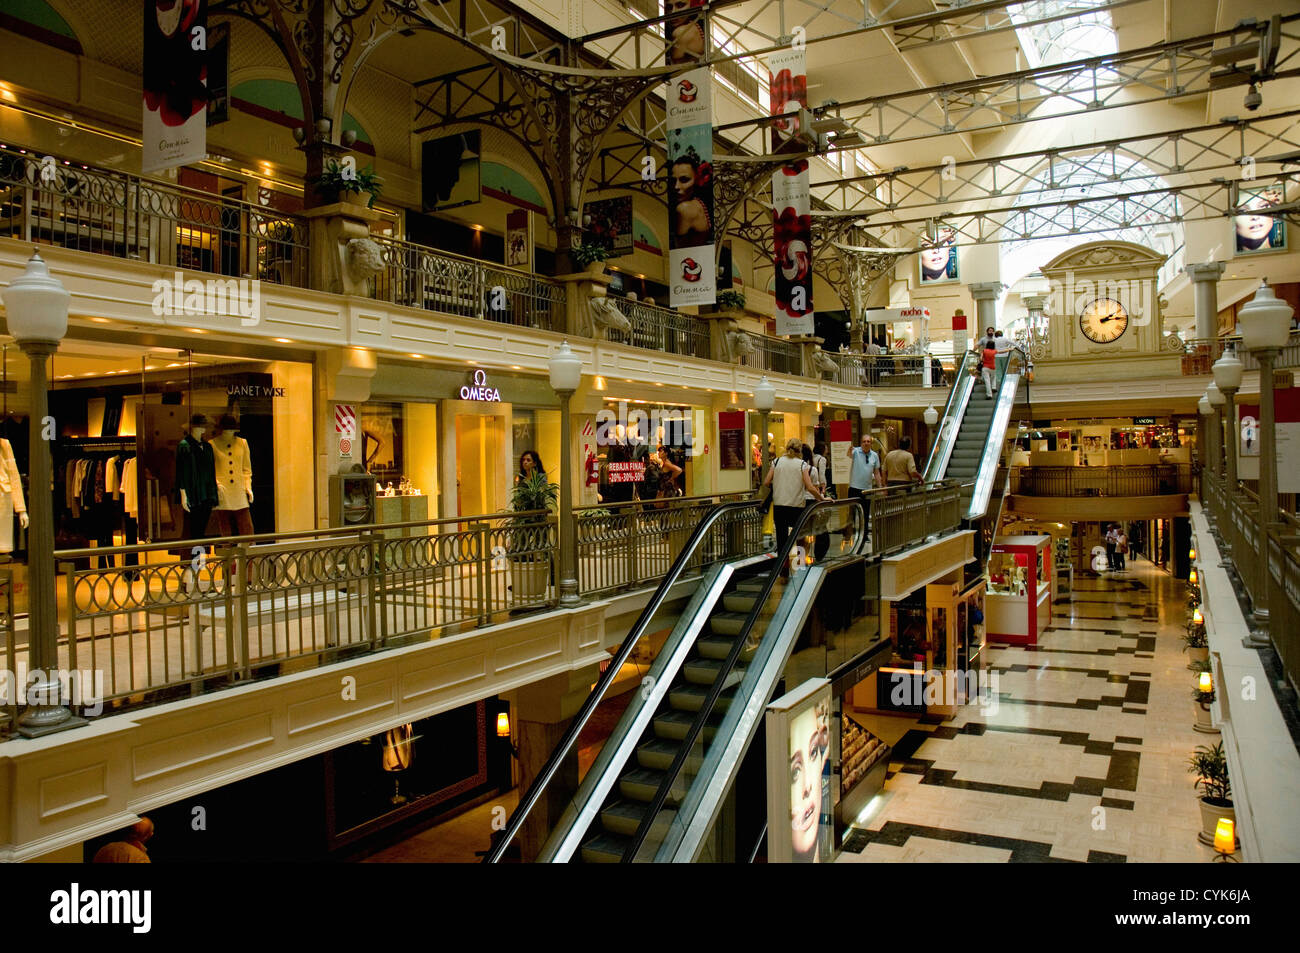 Argentina. Buenos Aires. Recoleta. Patio Bullrich upscale shopping mall. Stock Photo